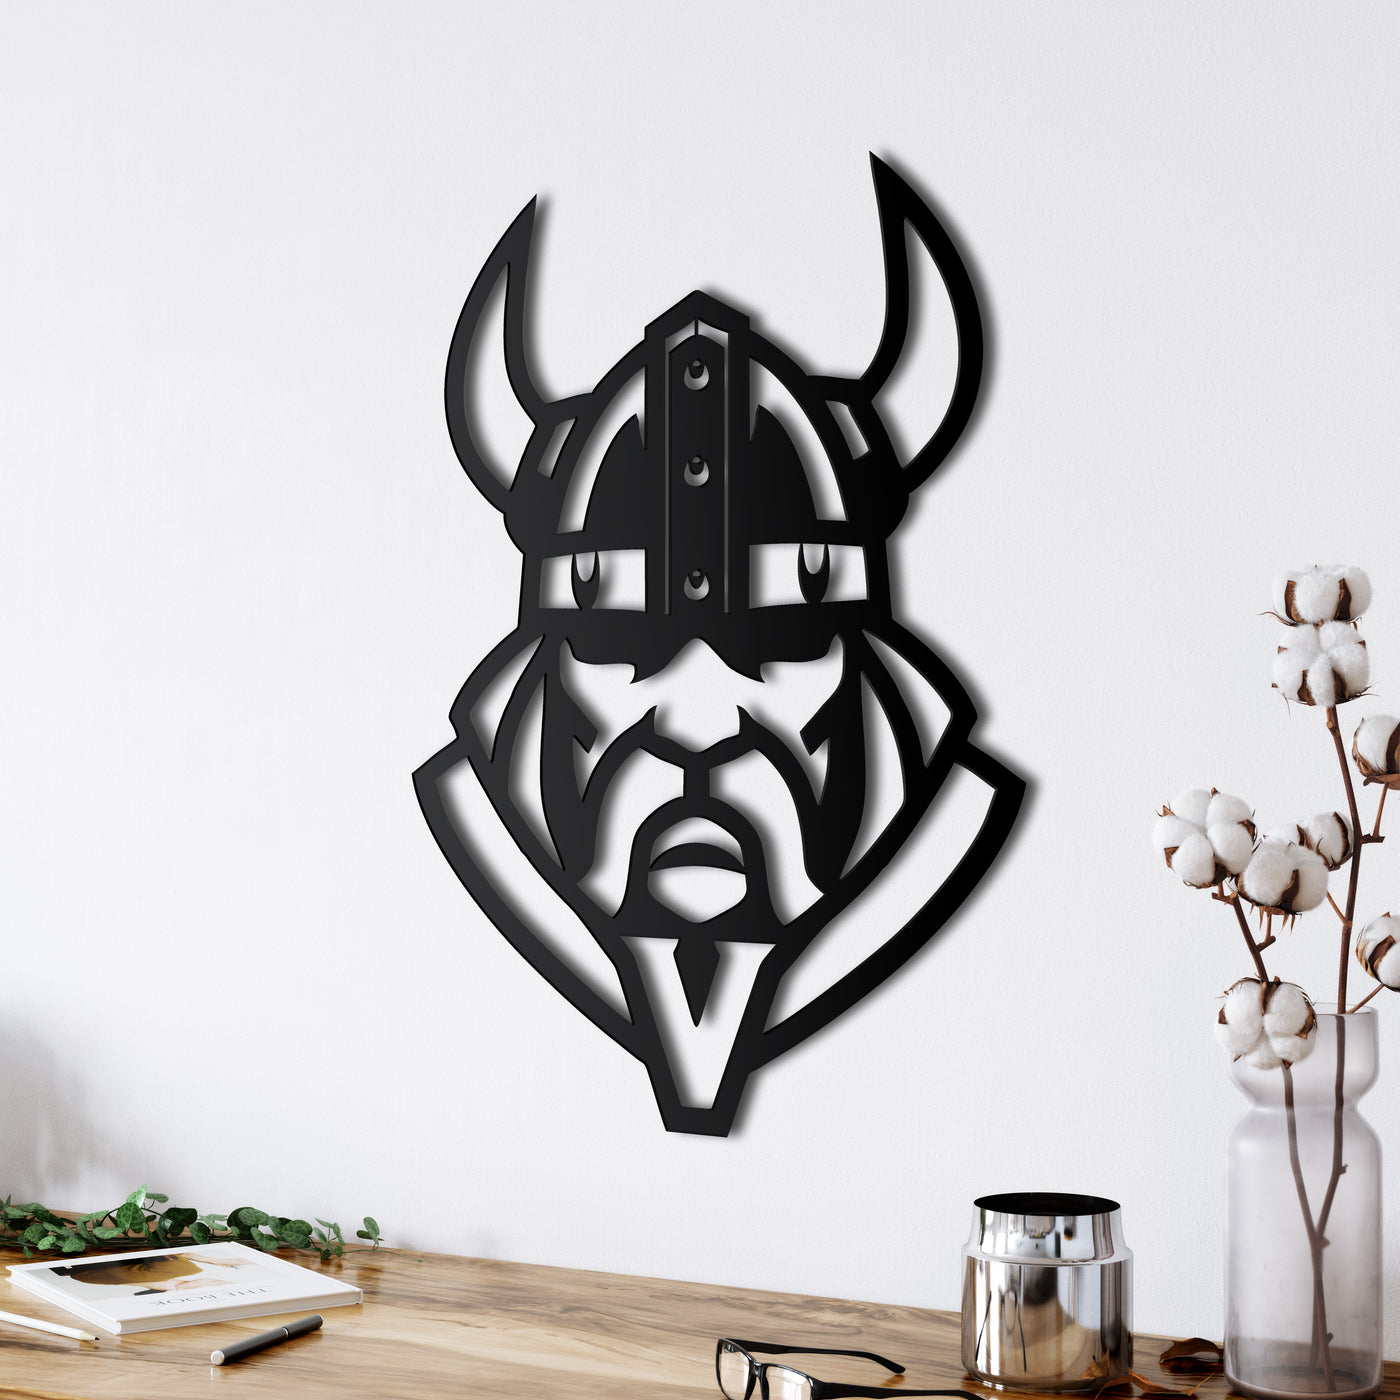 Viking Warrior Metal Wall Art